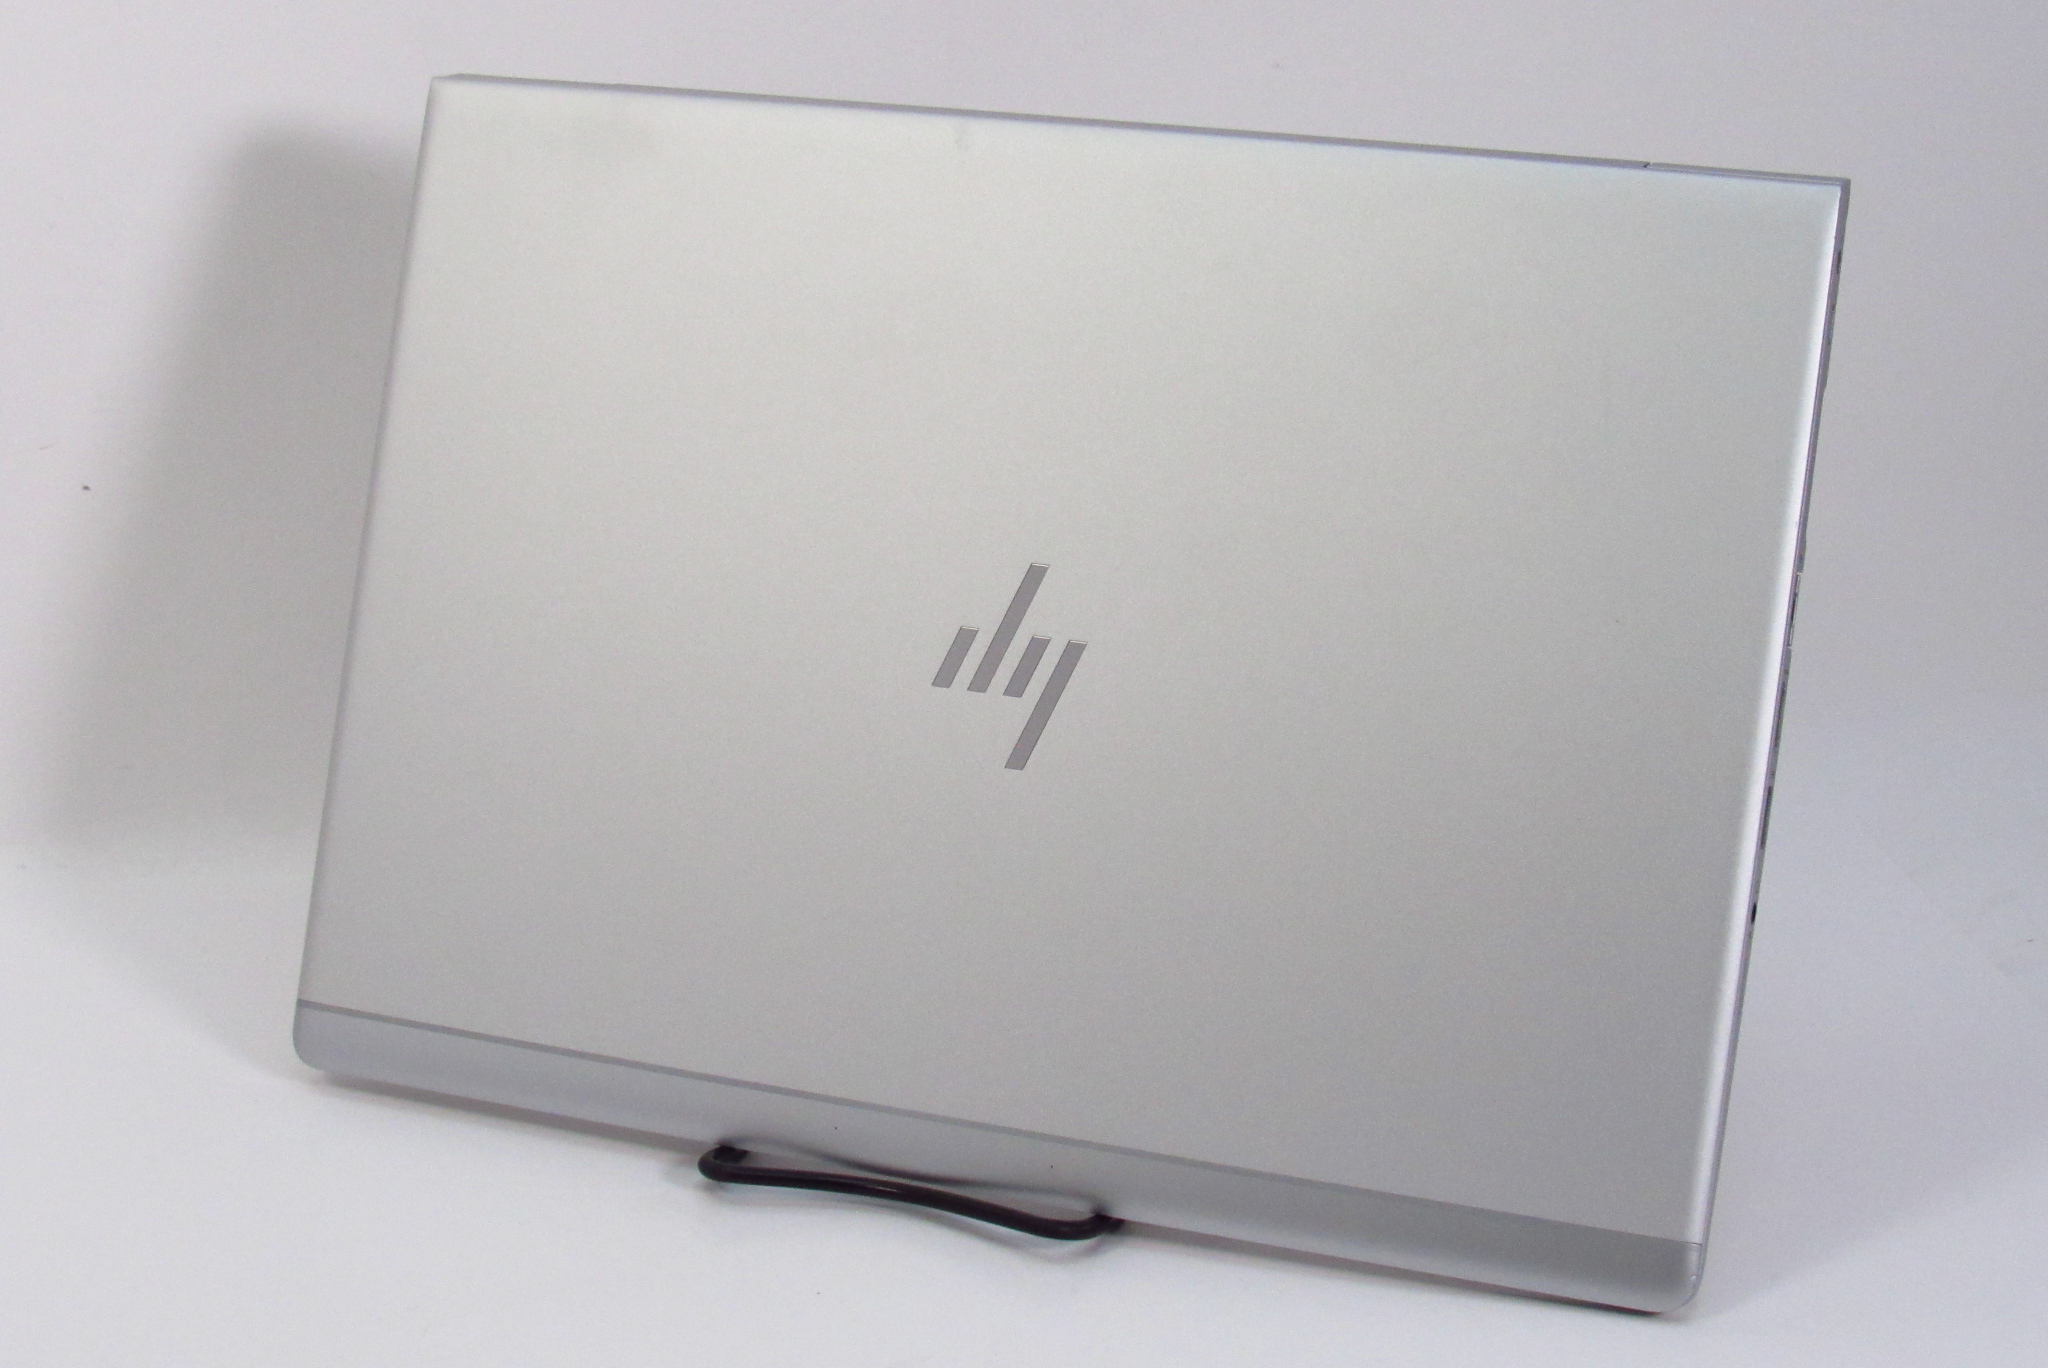 HP EliteBook 840 G6 14 Laptop Intel Core i5-8365U 1.6GHz 8GB RAM